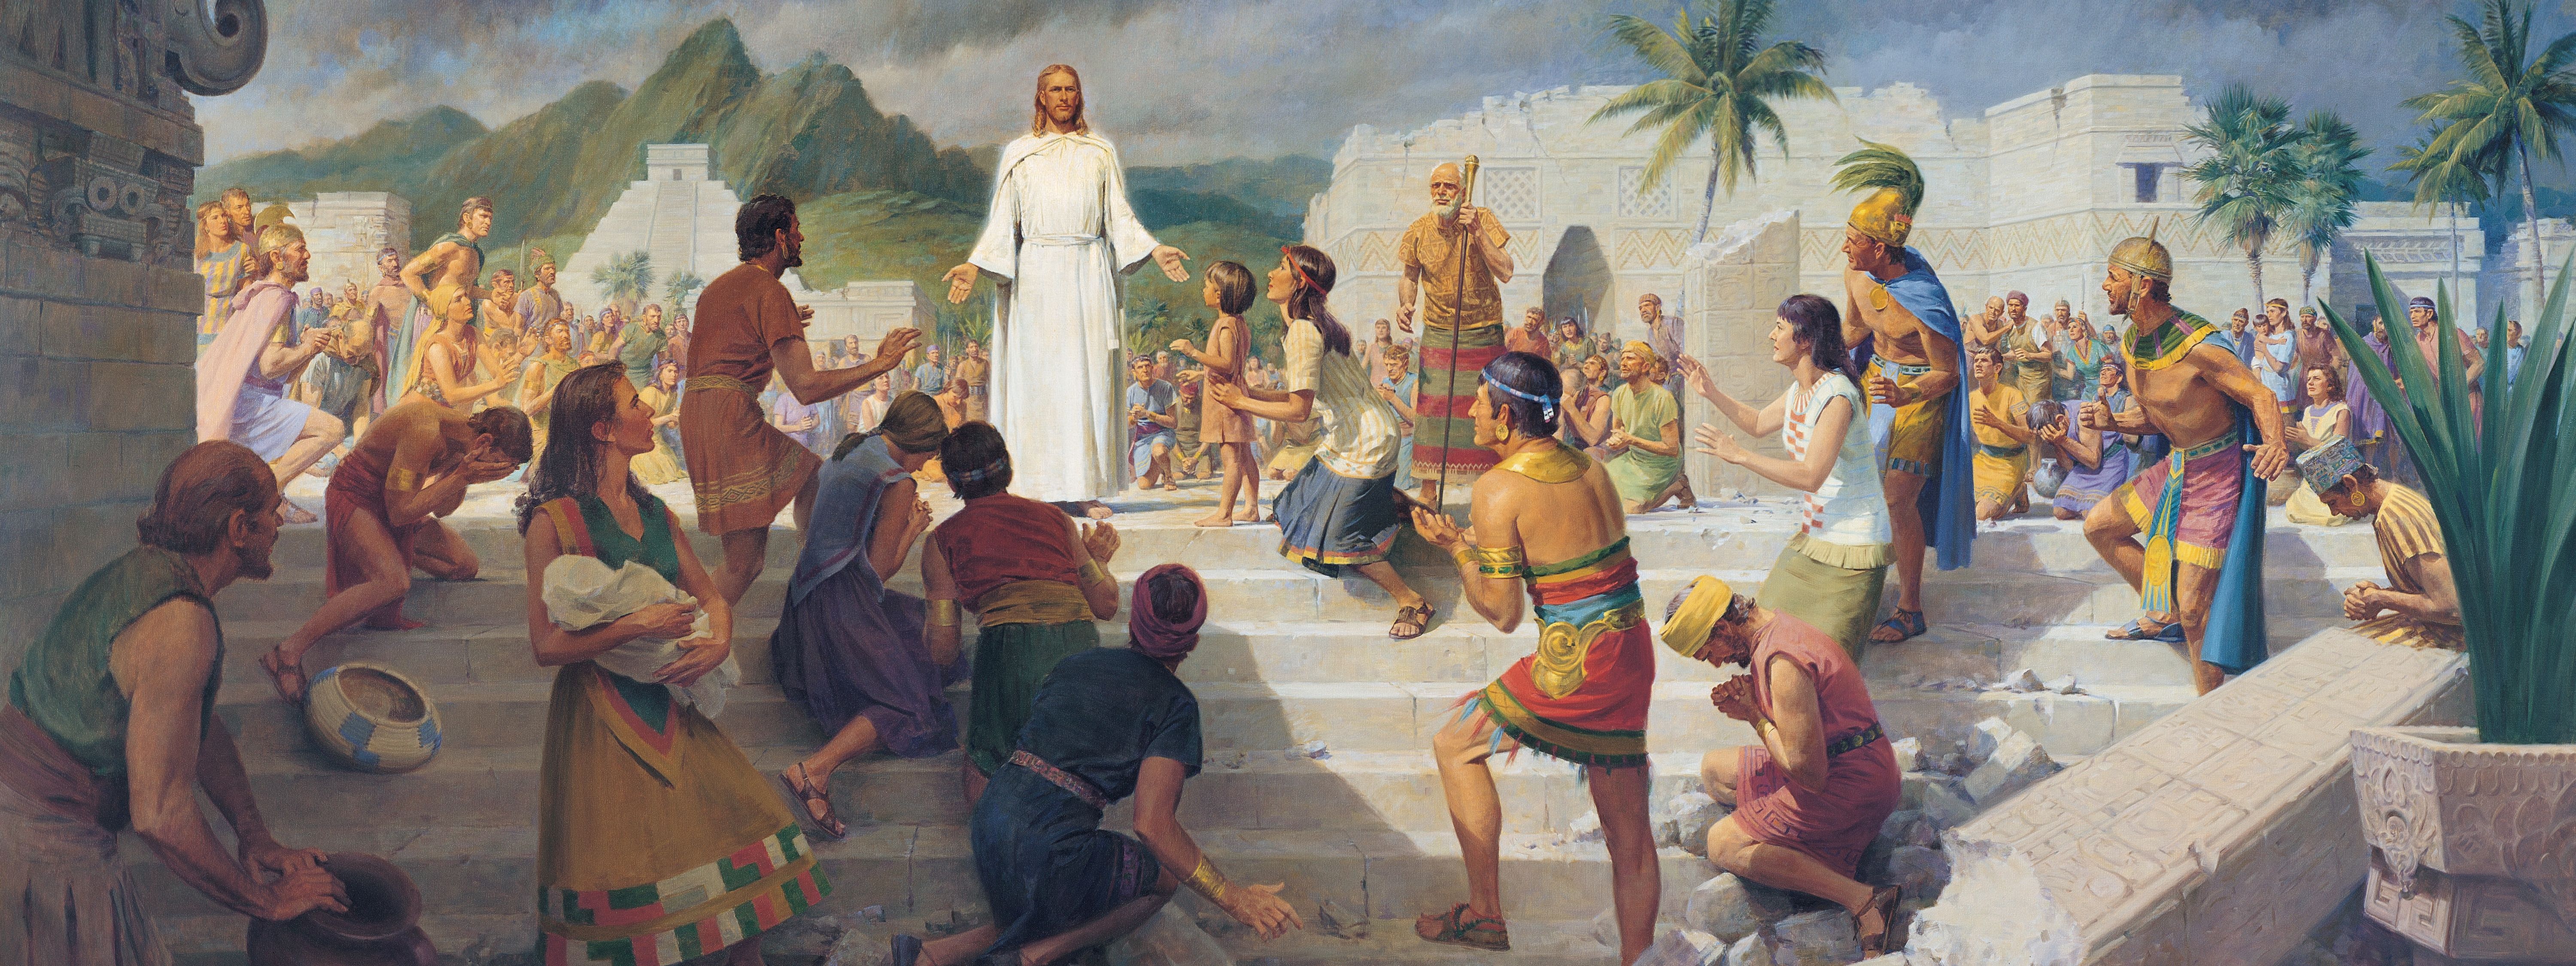 jesus visits the americas